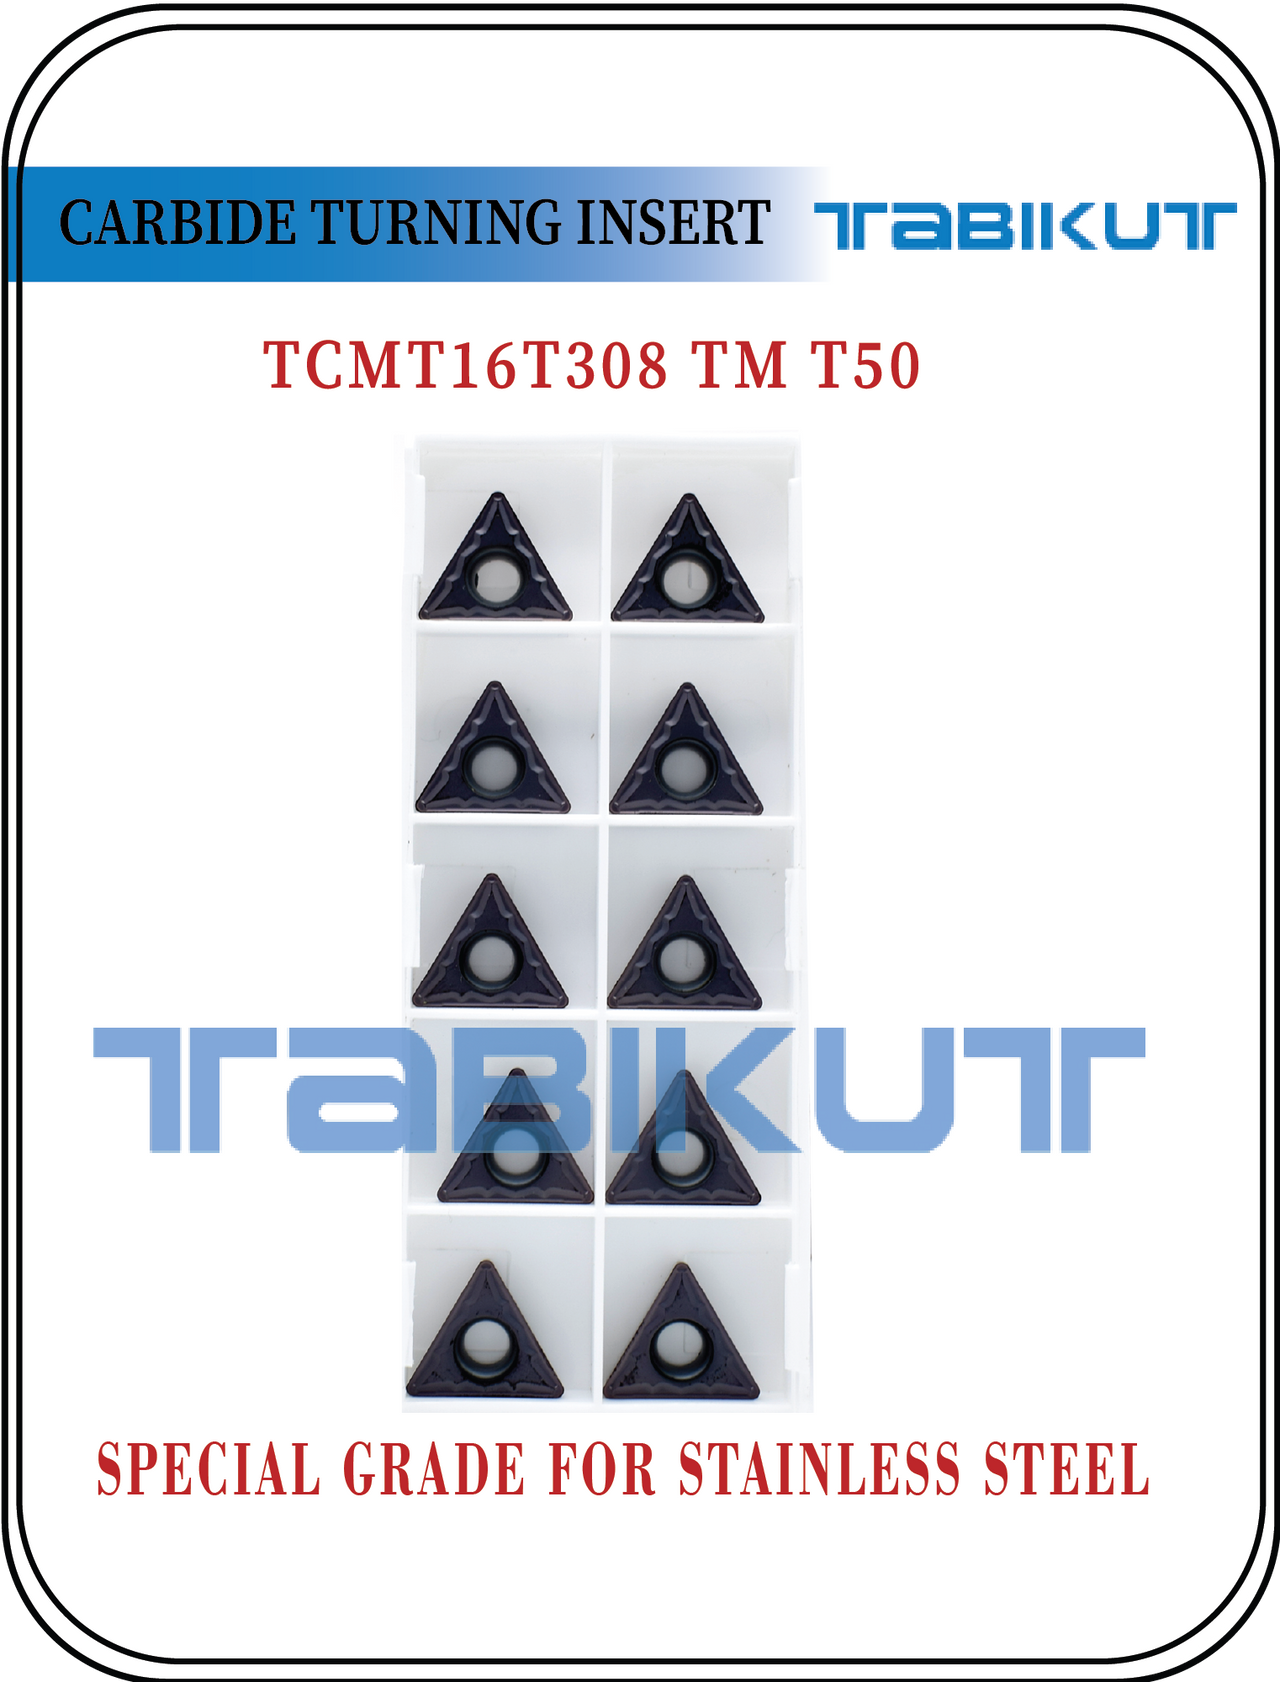 Stainless Steel Grade tabikut pack of 10